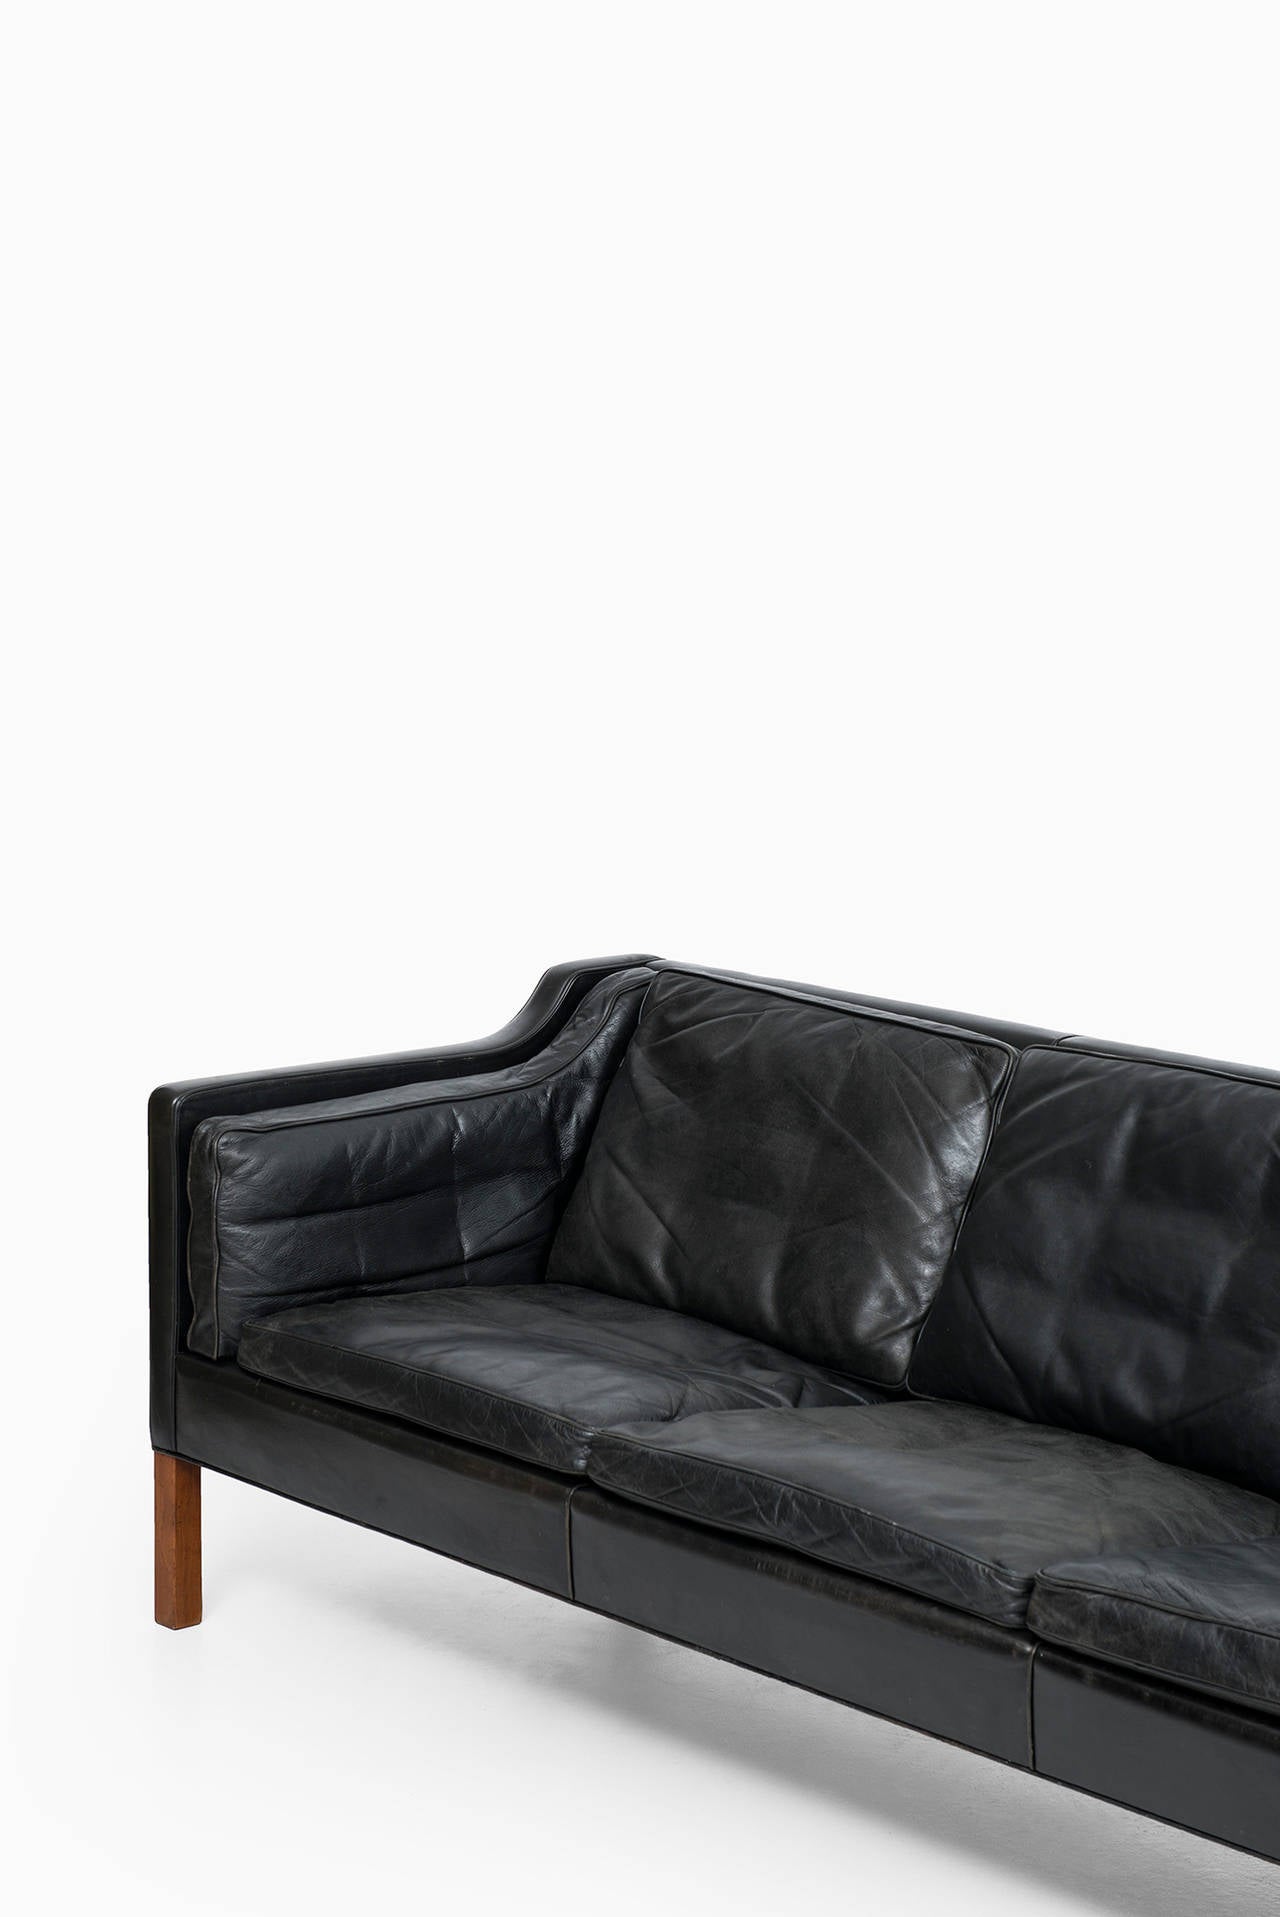 Mid-20th Century Børge Mogensen 2213 Leather Sofa by Fredericia Stolefabrik in Denmark